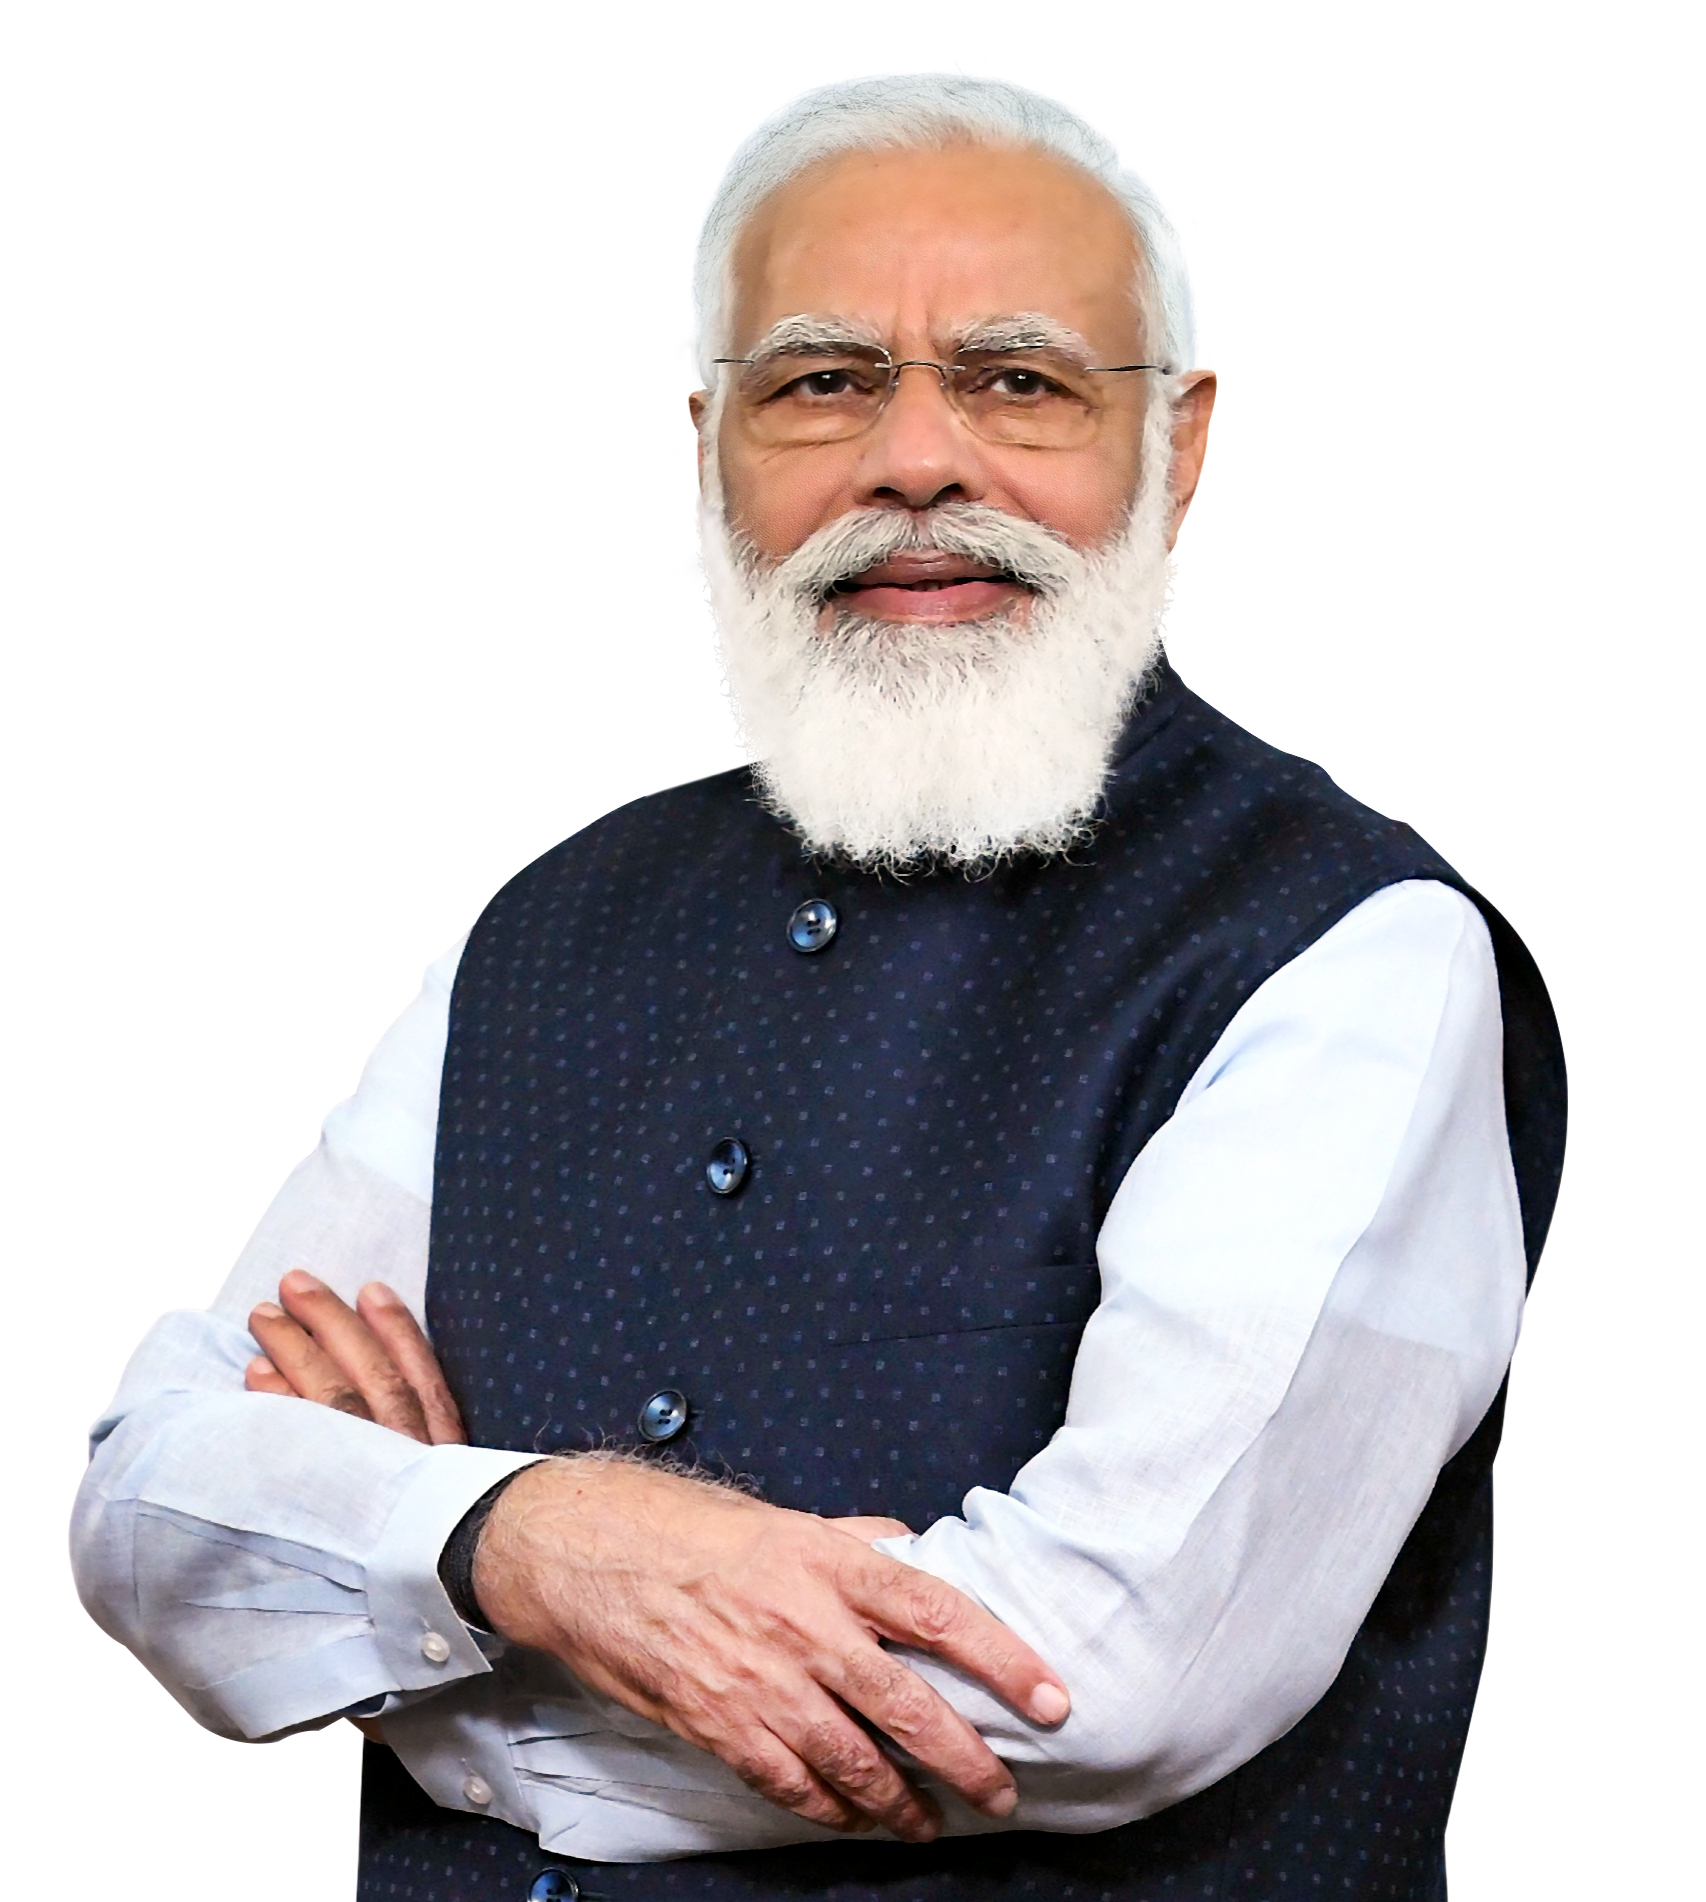 File:Official portrait of the Prime Minister Narendra Modi, November 2020  (cropped).jpg - Wikipedia